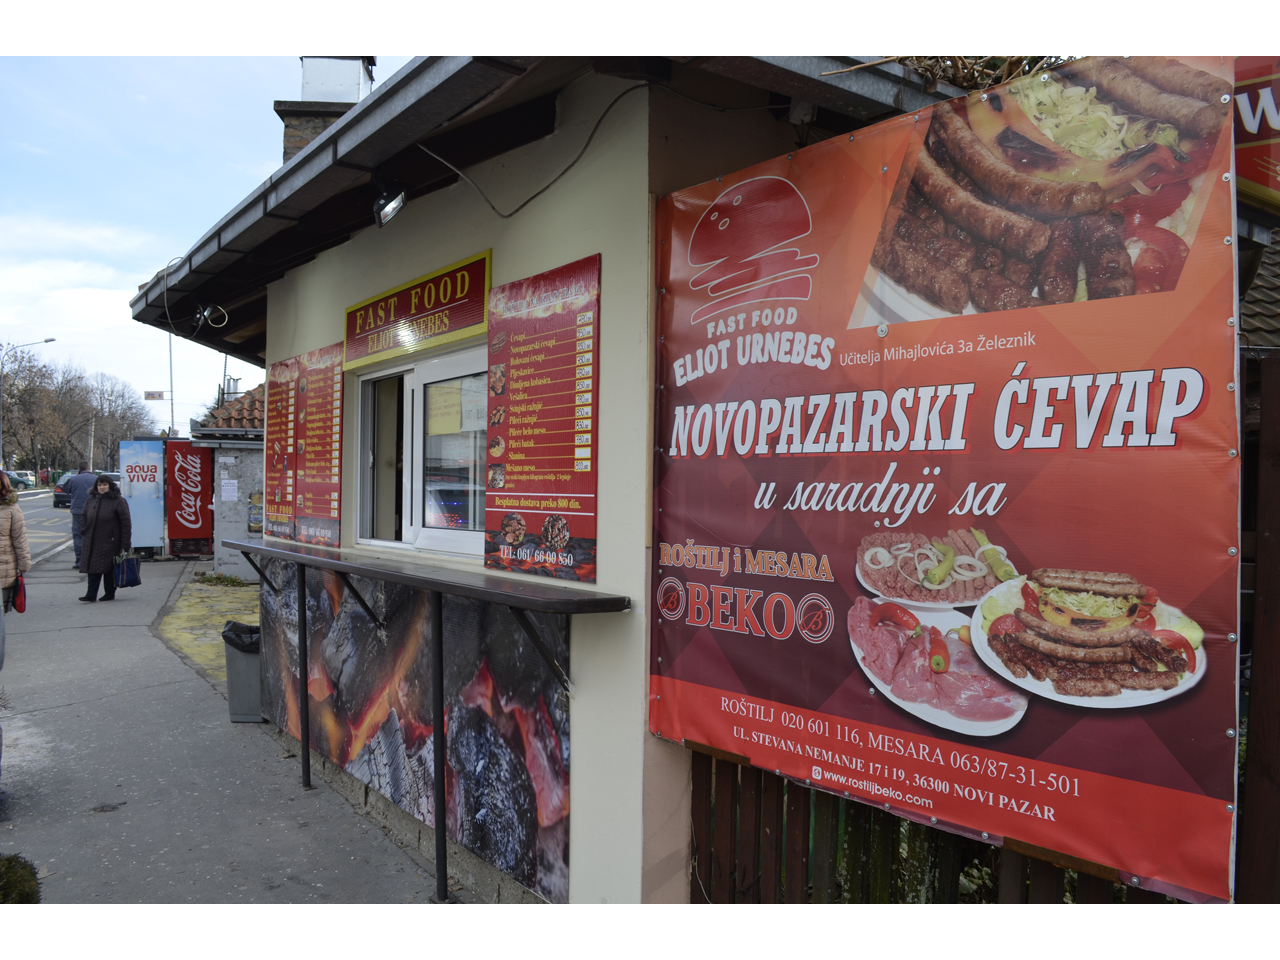 FAST FOOD ELIOT URNEBES Grill Belgrade - Photo 1